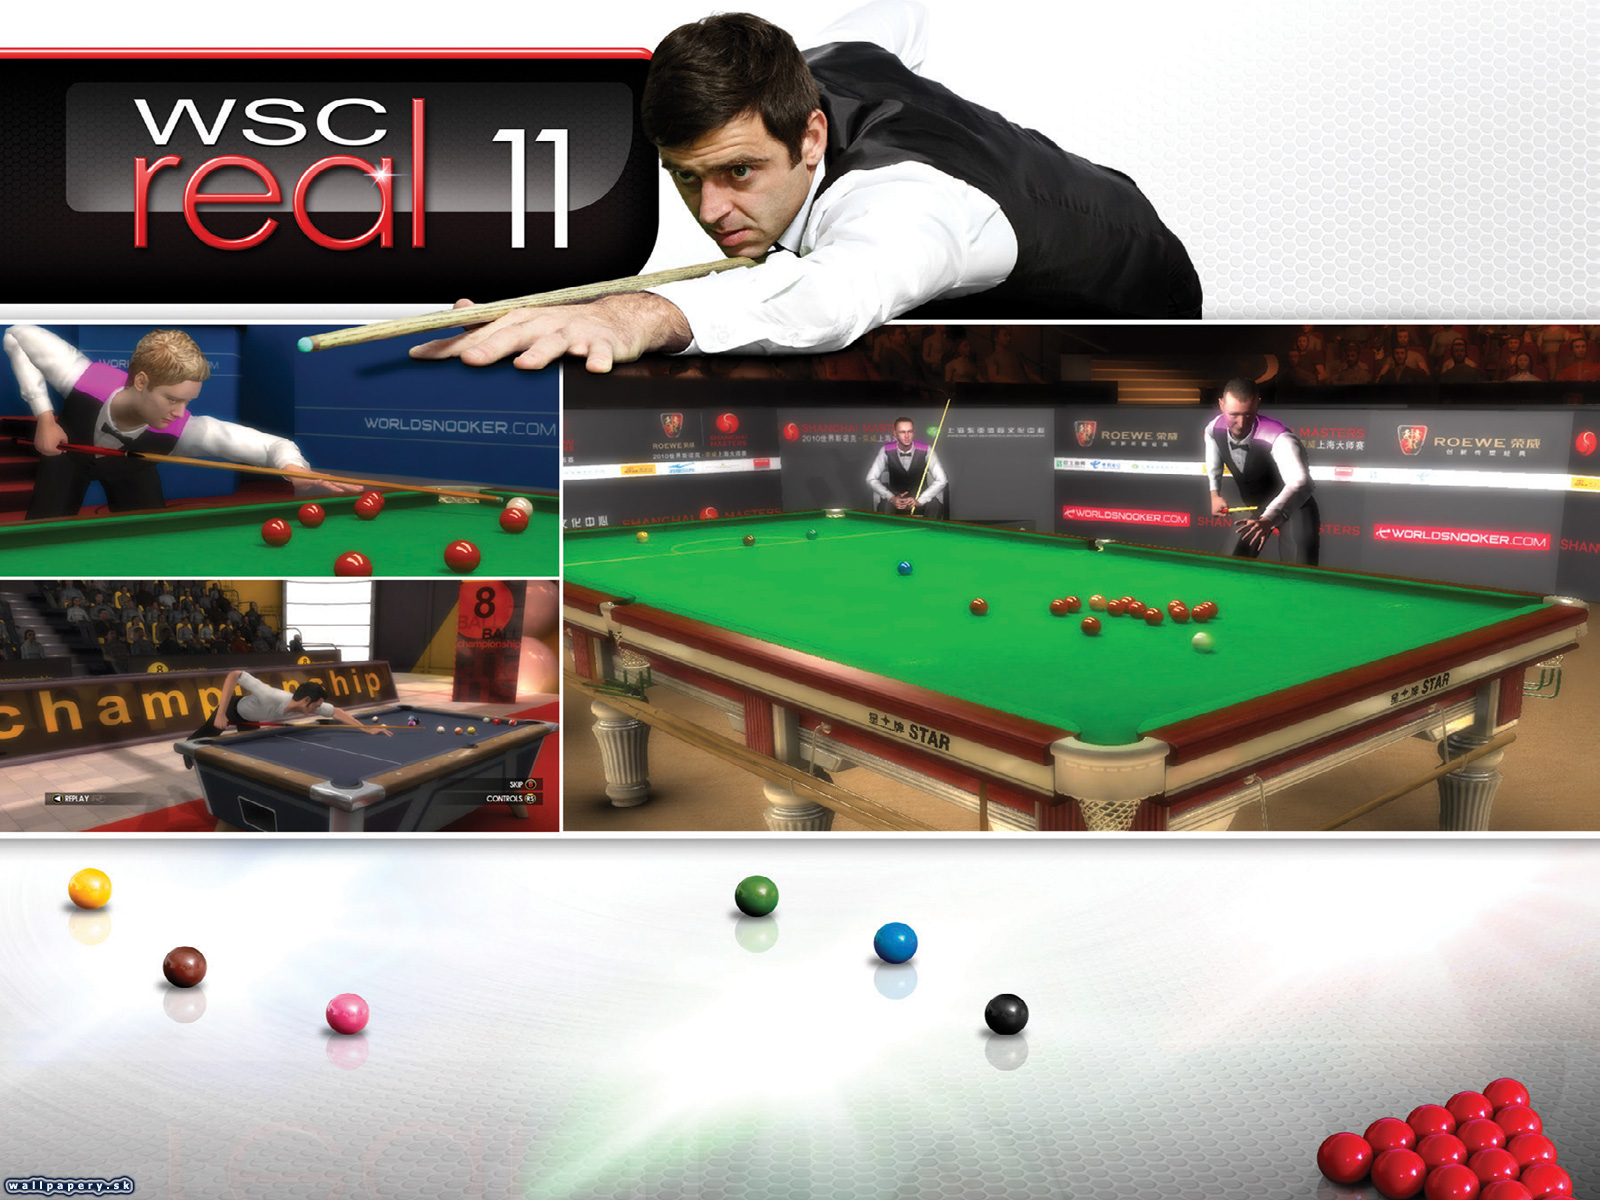 WSC Real 11: World Snooker Championship - wallpaper 2